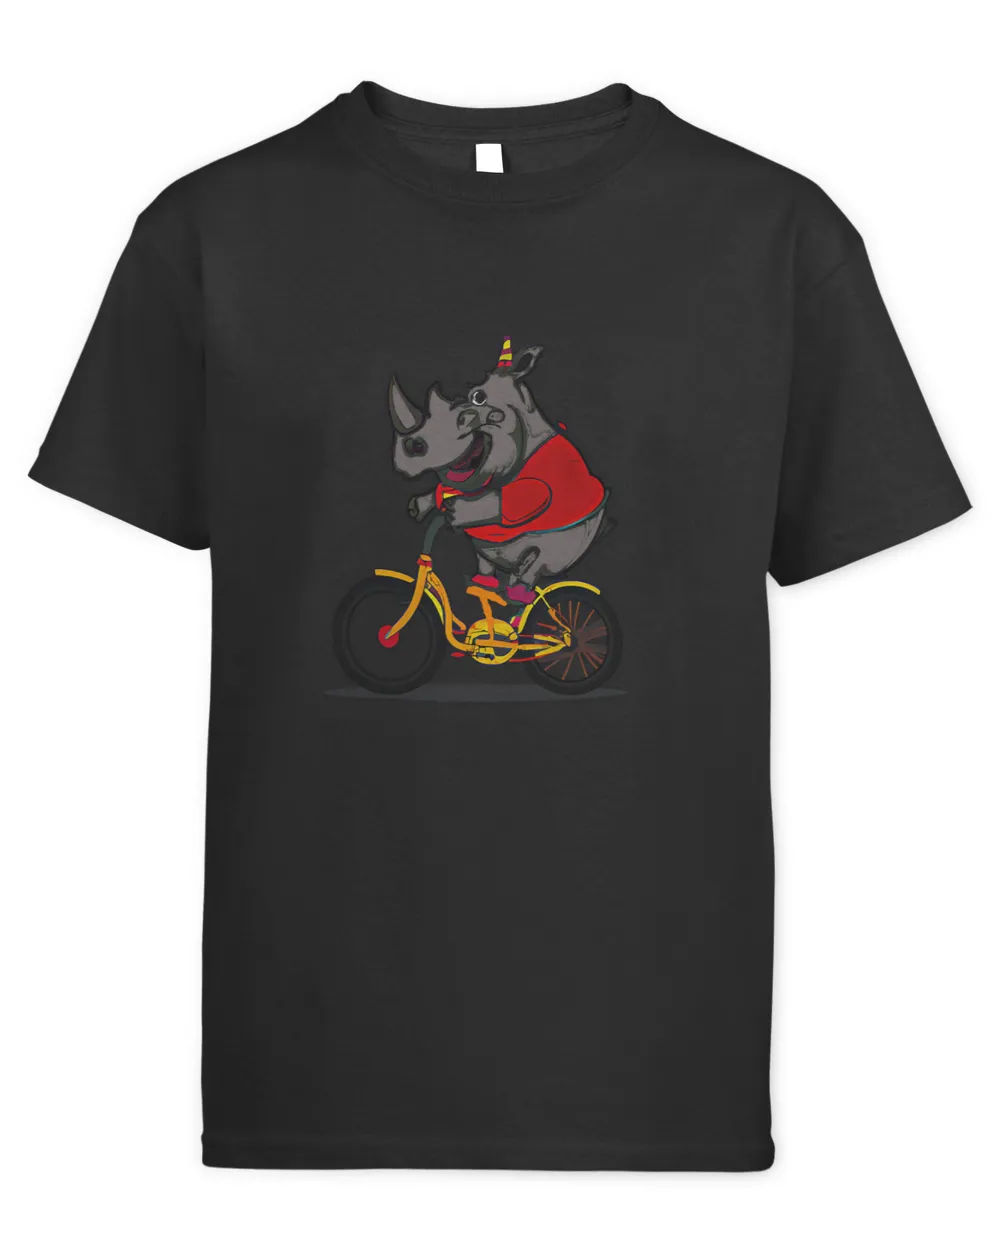 Funny rhinoceros riding bicycle motif 2rhino horns 21